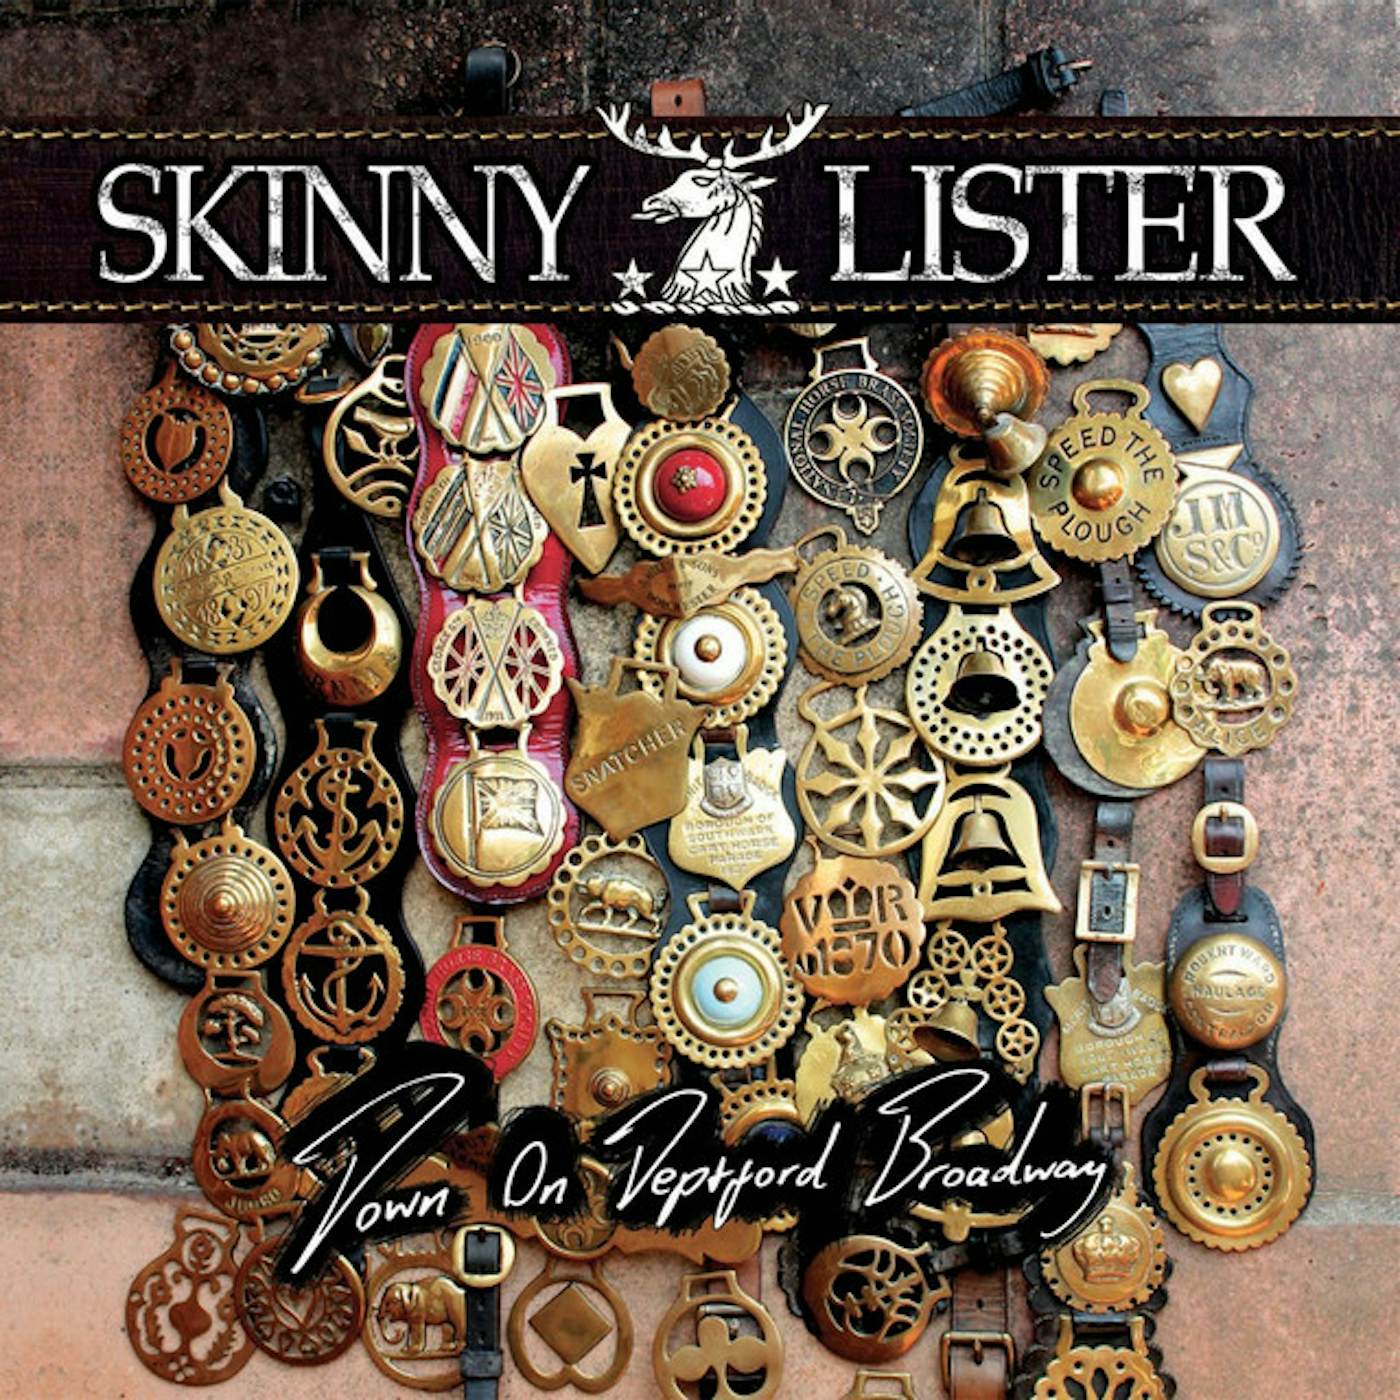 Skinny Lister Down on Deptford Broadway Vinyl Record